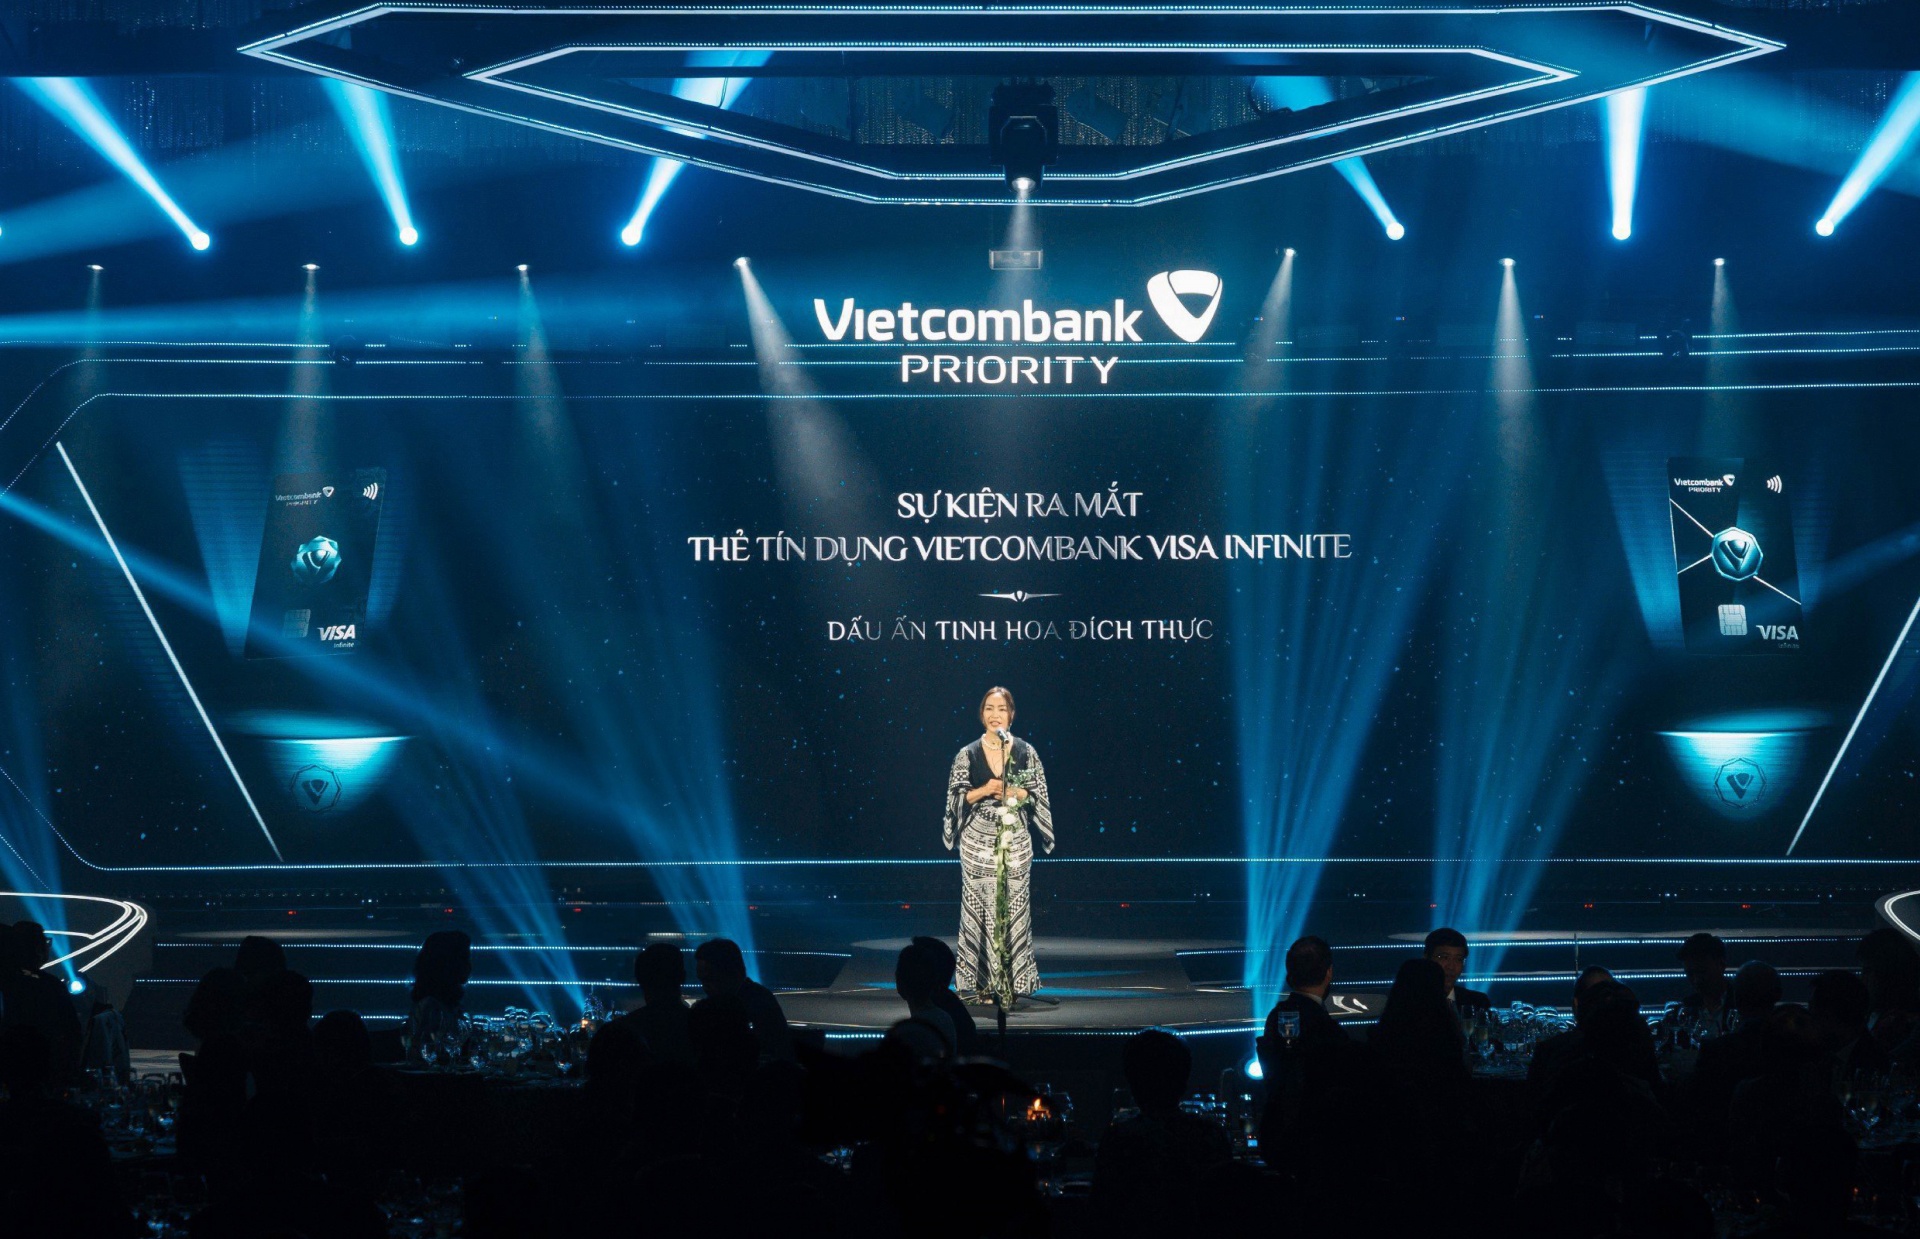 Vietcombank launches the Visa Infinite Credit Card